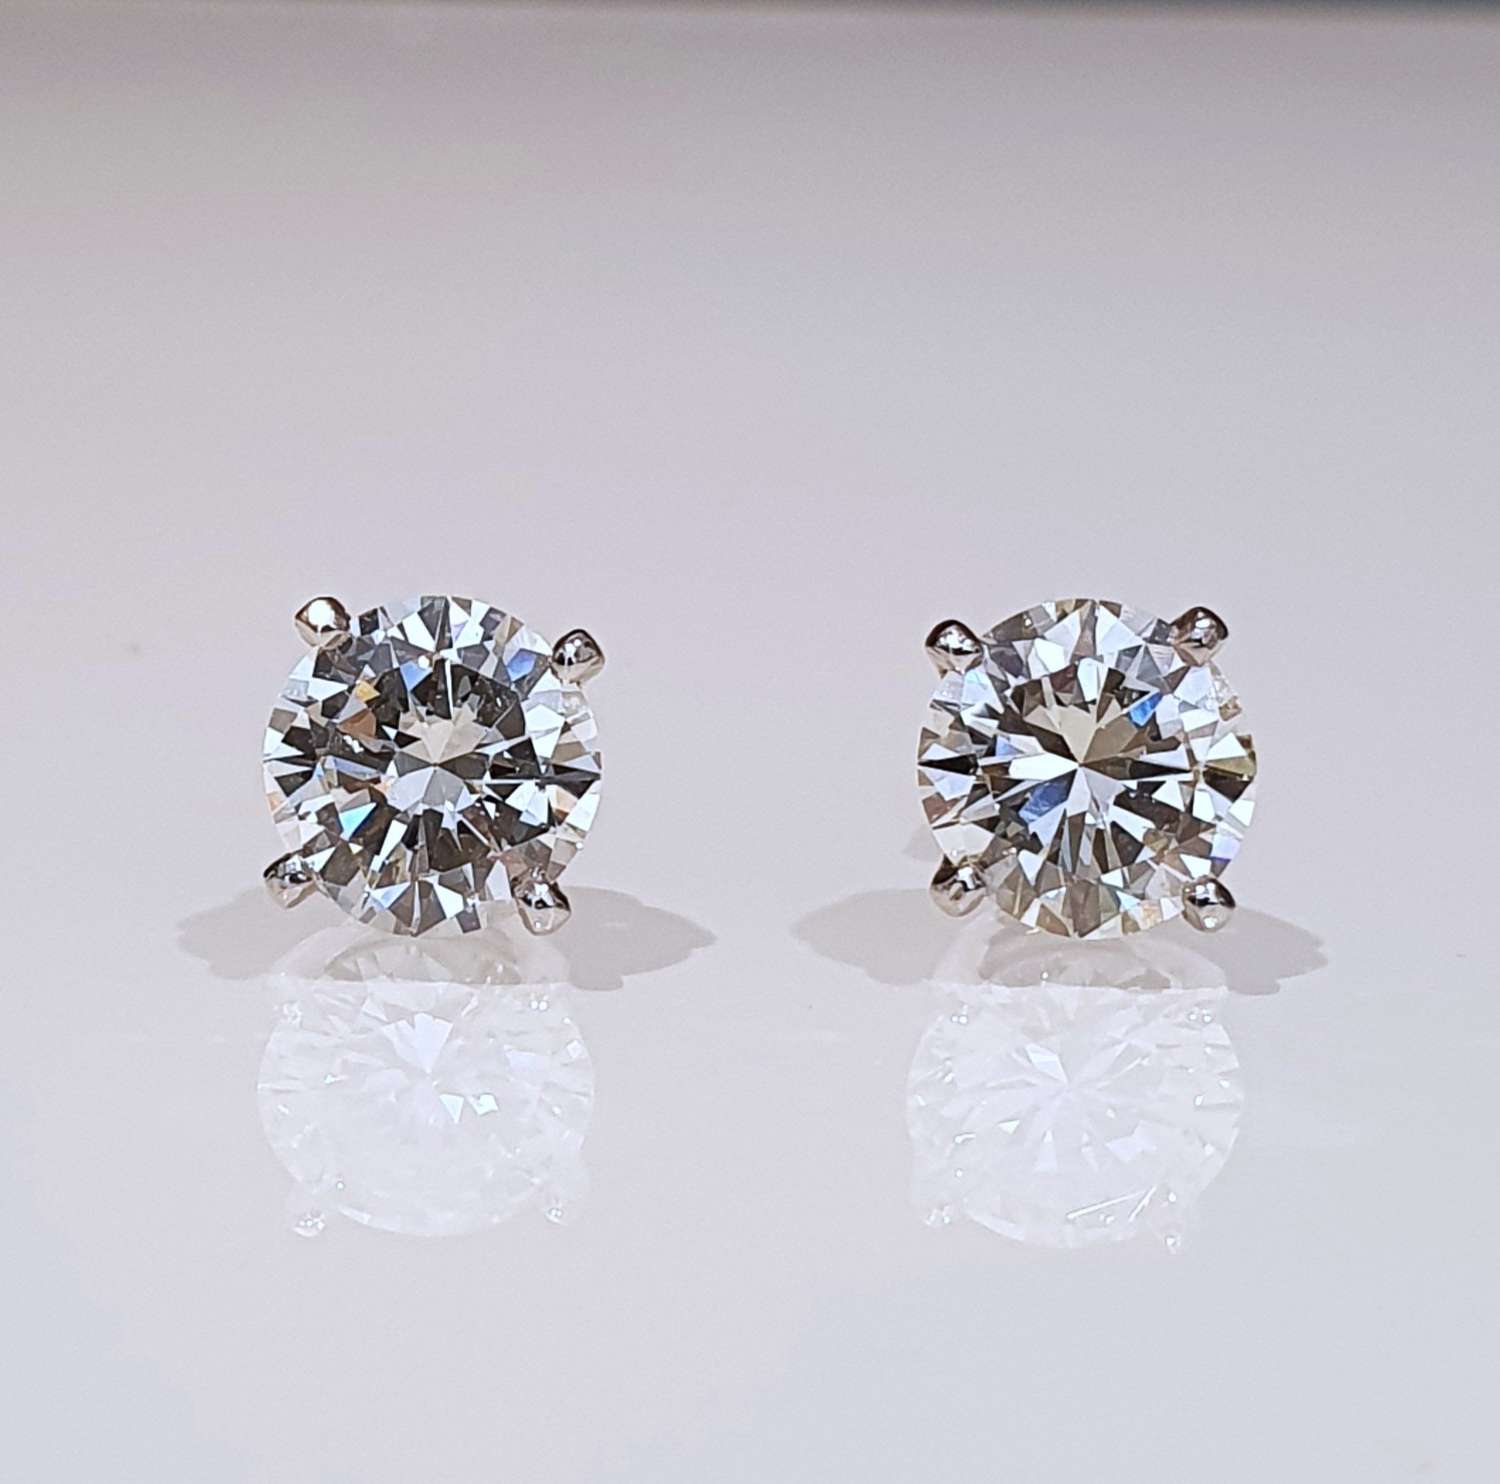 Diamond stud earrings 3.77 carats total